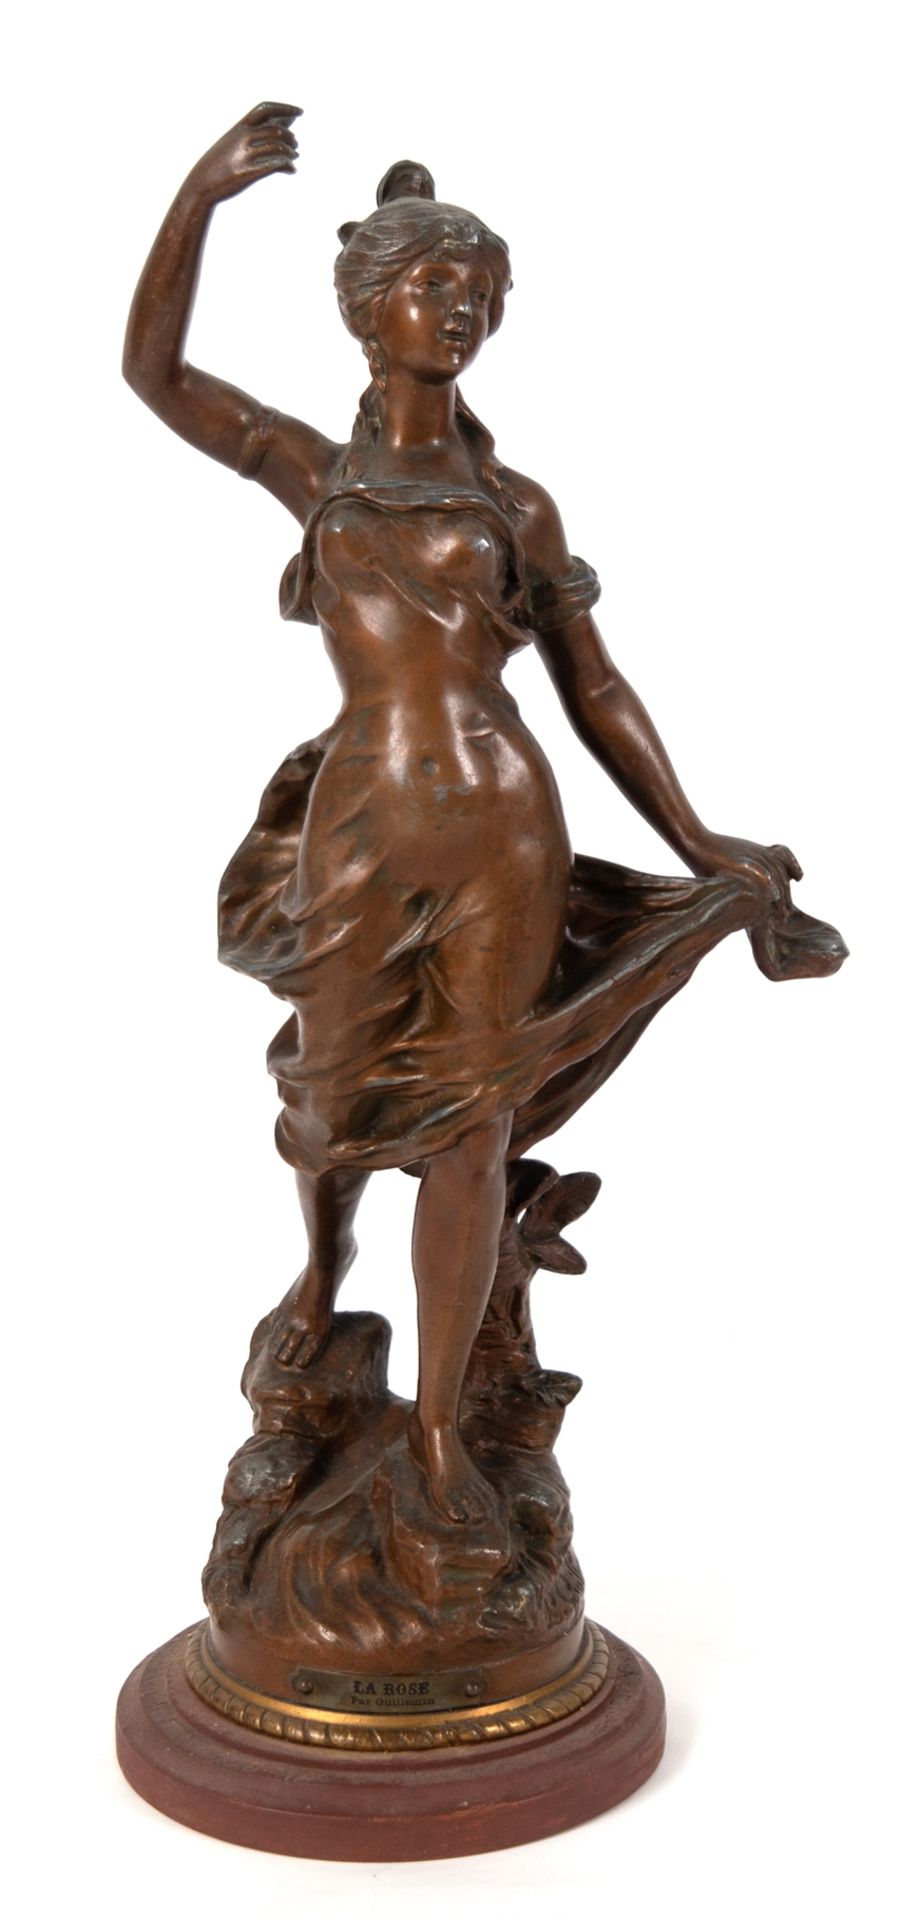 Skulptur "La Rose", nach L. Guillemin, Metallguß bronziert, Anfang 20. Jh., auf Plinthe bez., auf b